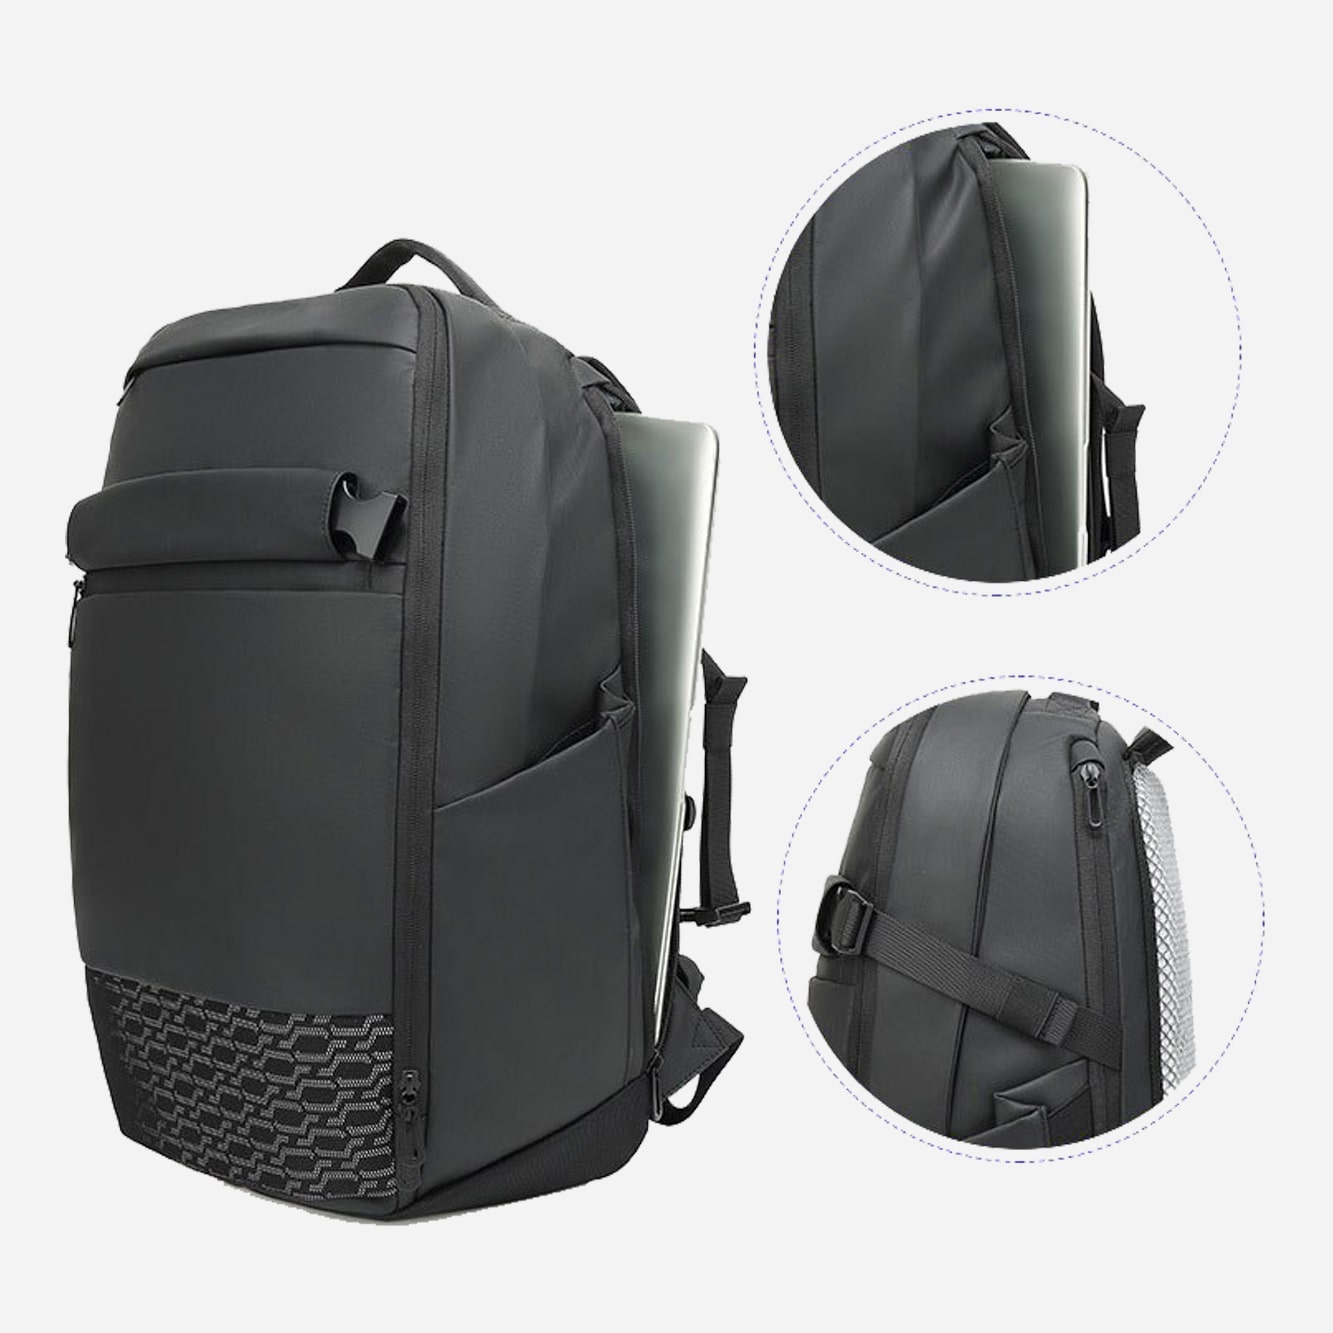 business laptop backpack for businessmen